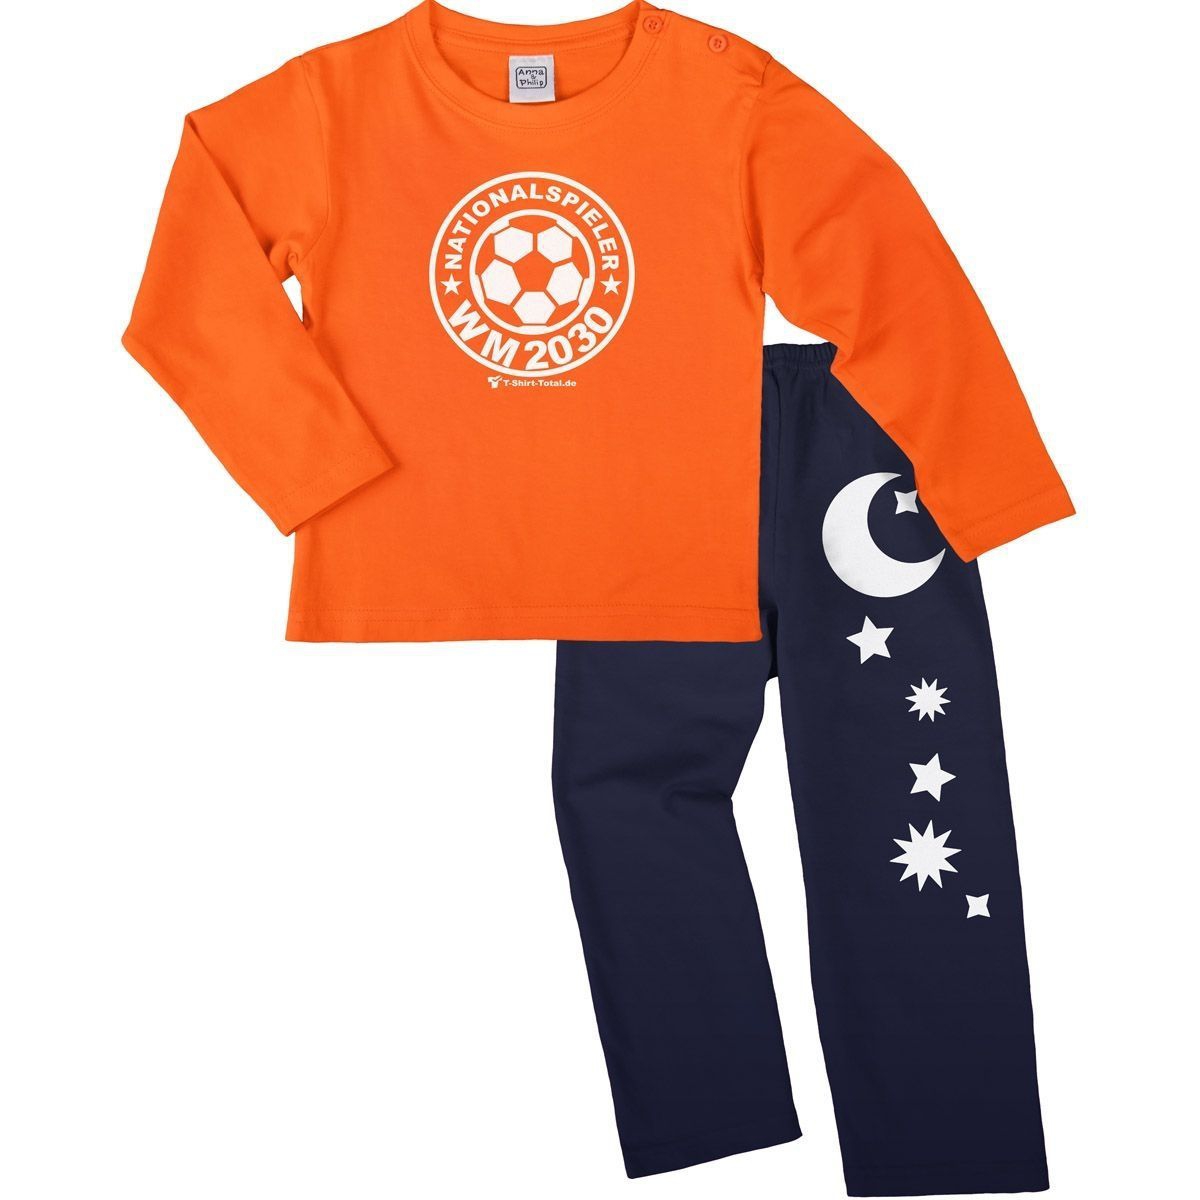 Nationalspieler 2042 Pyjama Set orange / navy 92